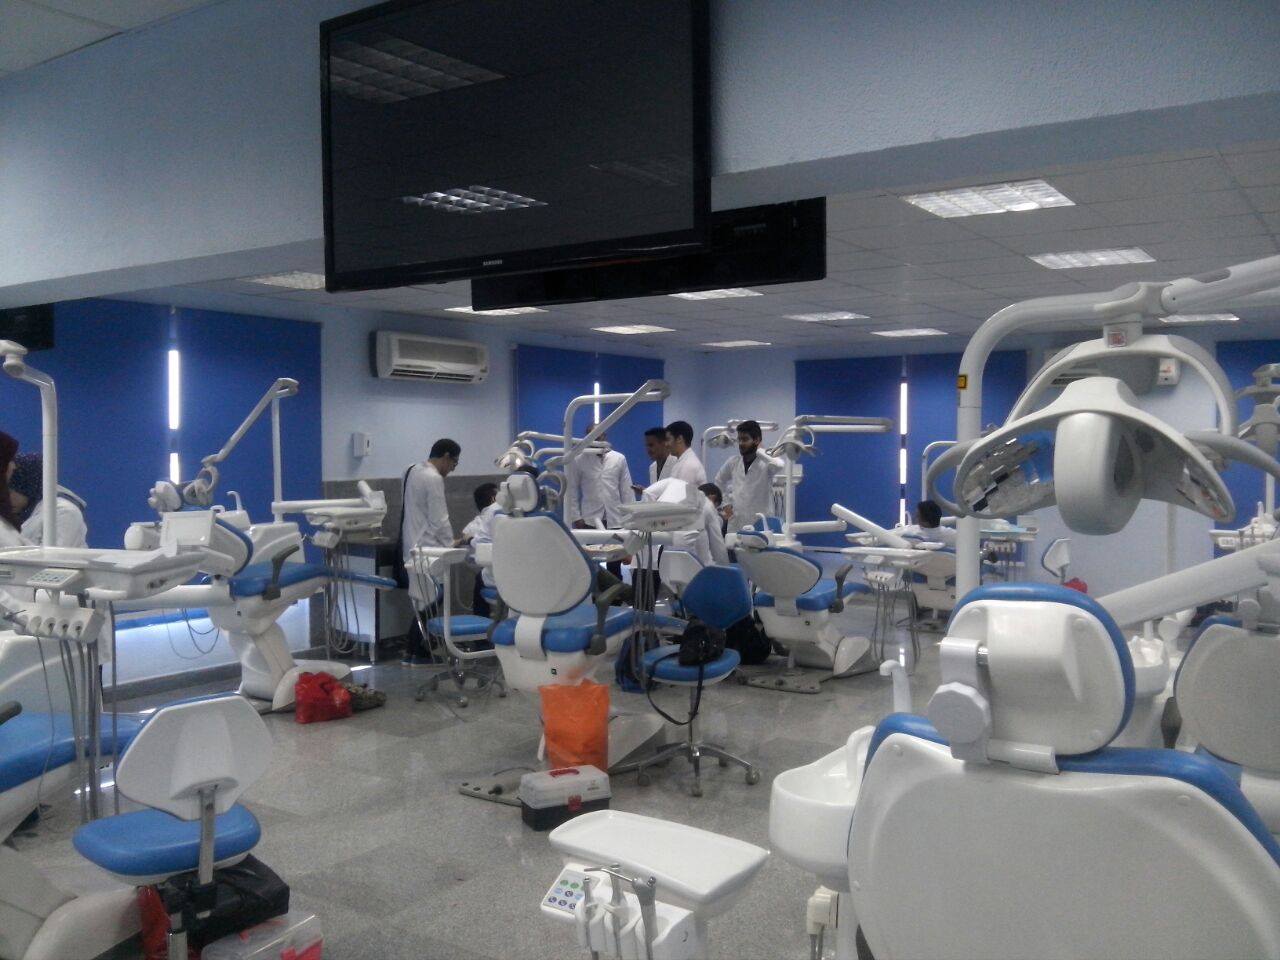 Dental clinic 2